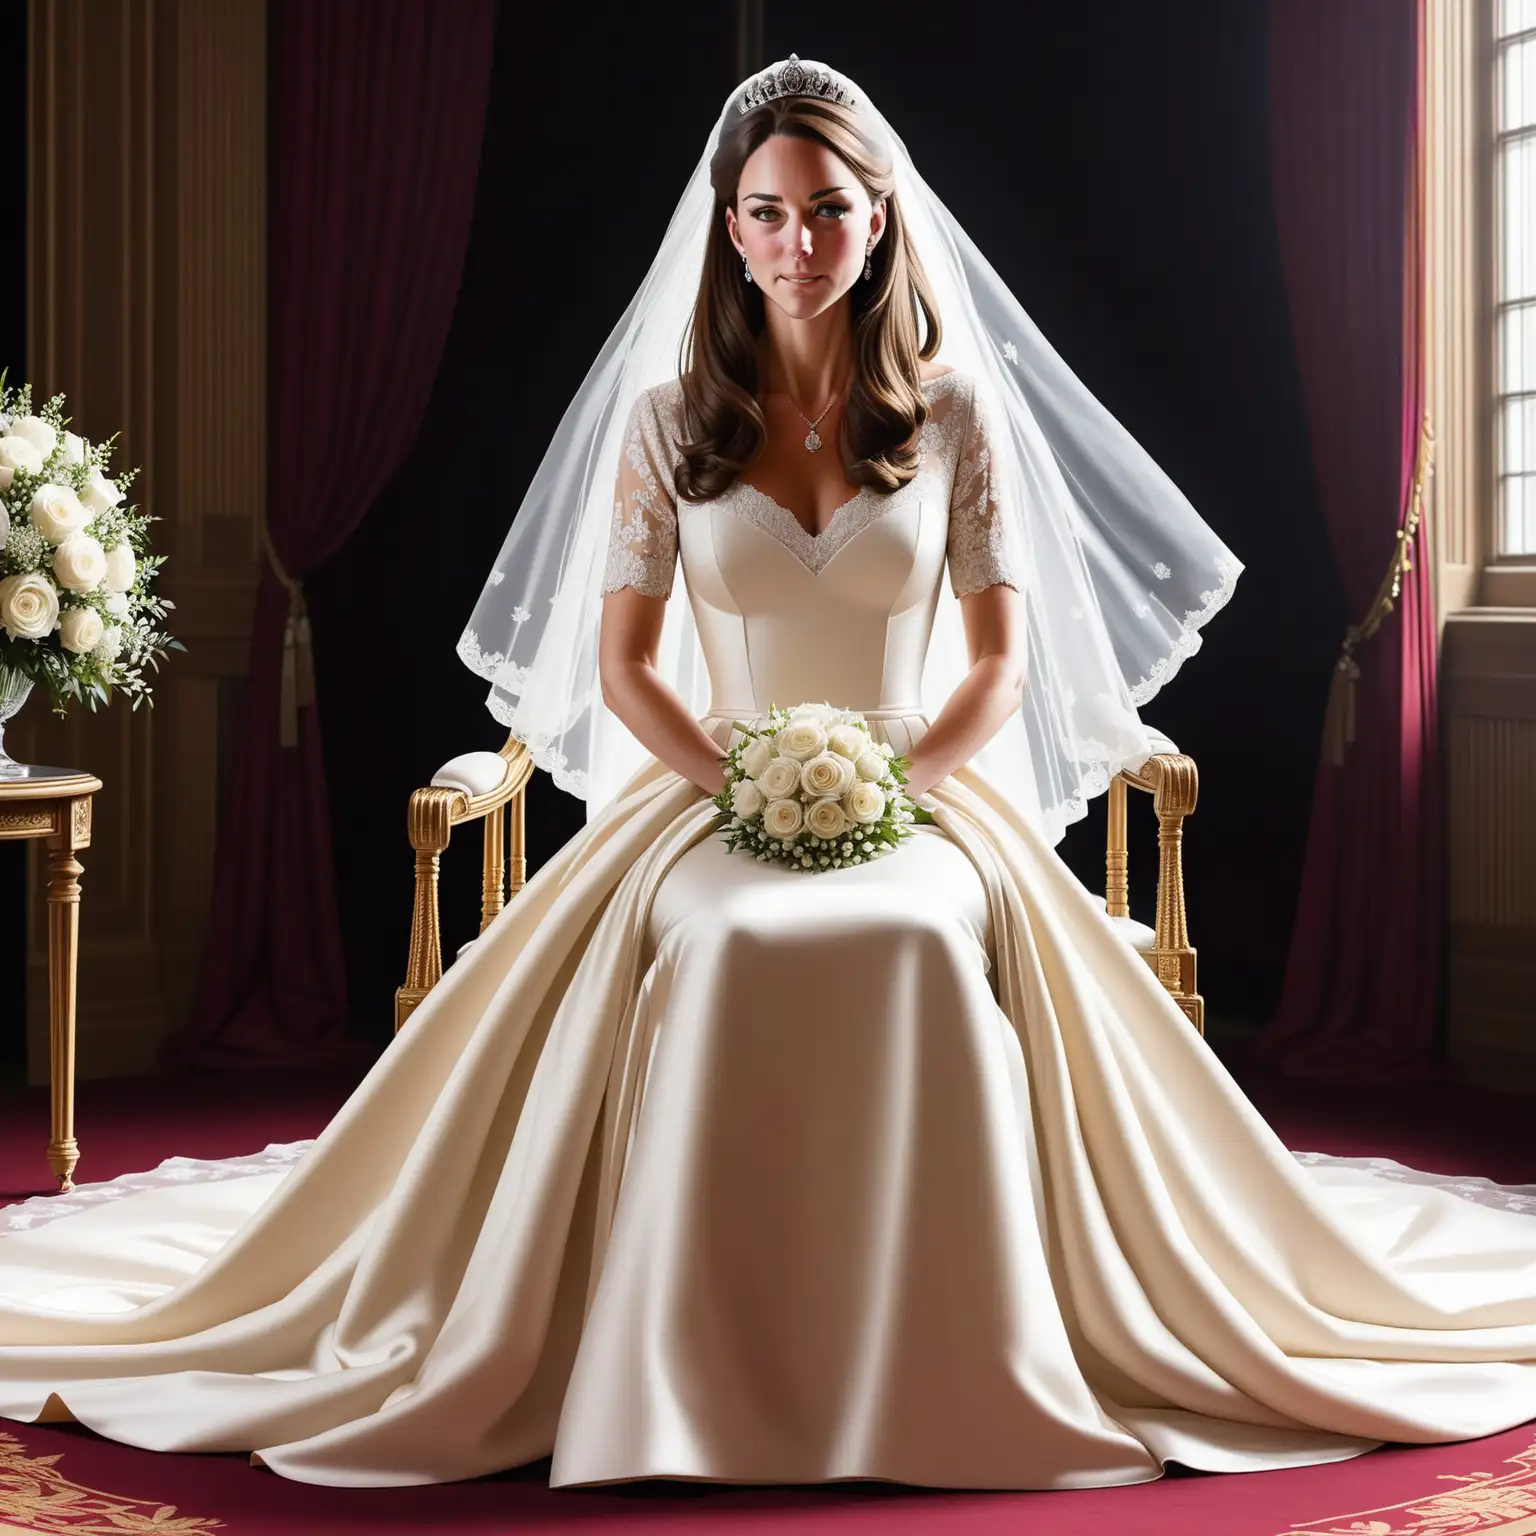 Hypnotized Kate Middleton in Magnificent Ivory Satin Duchess Wedding Dress